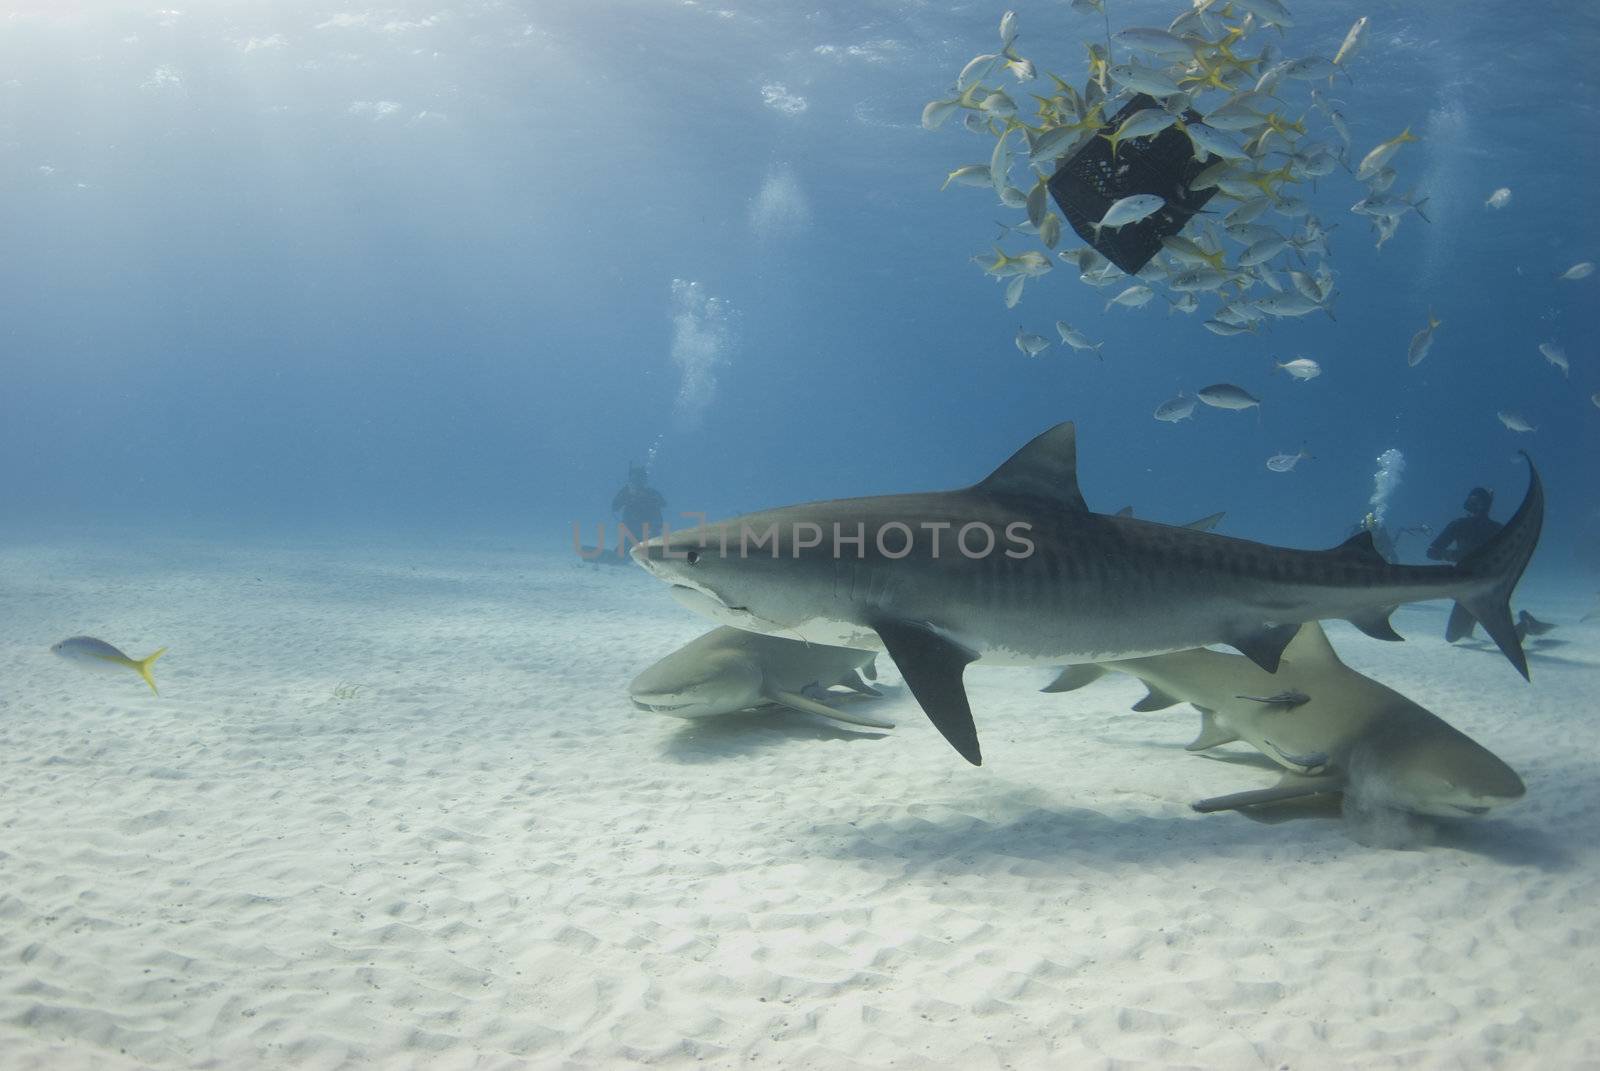 A tiger shark circles a school of bait fish feeding on bait while lemon sharks swim below